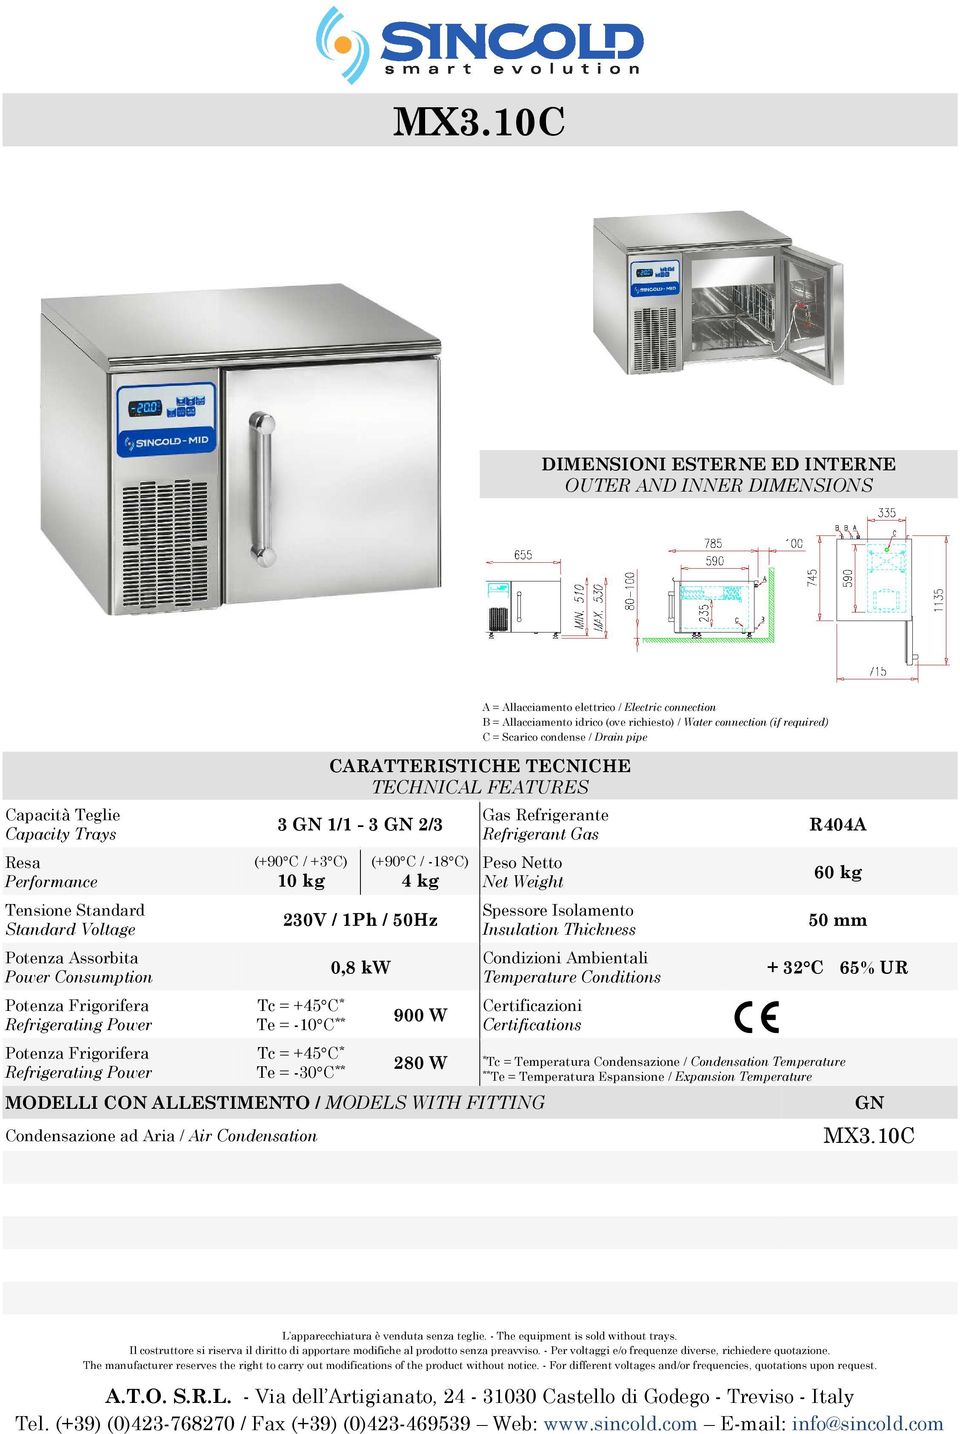 GN 1/1-3 GN 2/3 (+90 C / +3 C) 10 kg (+90 C / -18 C) 4 kg 230V / 1Ph / 50Hz Te = -10 C ** Te = -30 C ** 0,8 kw 900 W Gas Refrigerante Refrigerant Gas Peso Netto Net Weight Spessore Isolamento